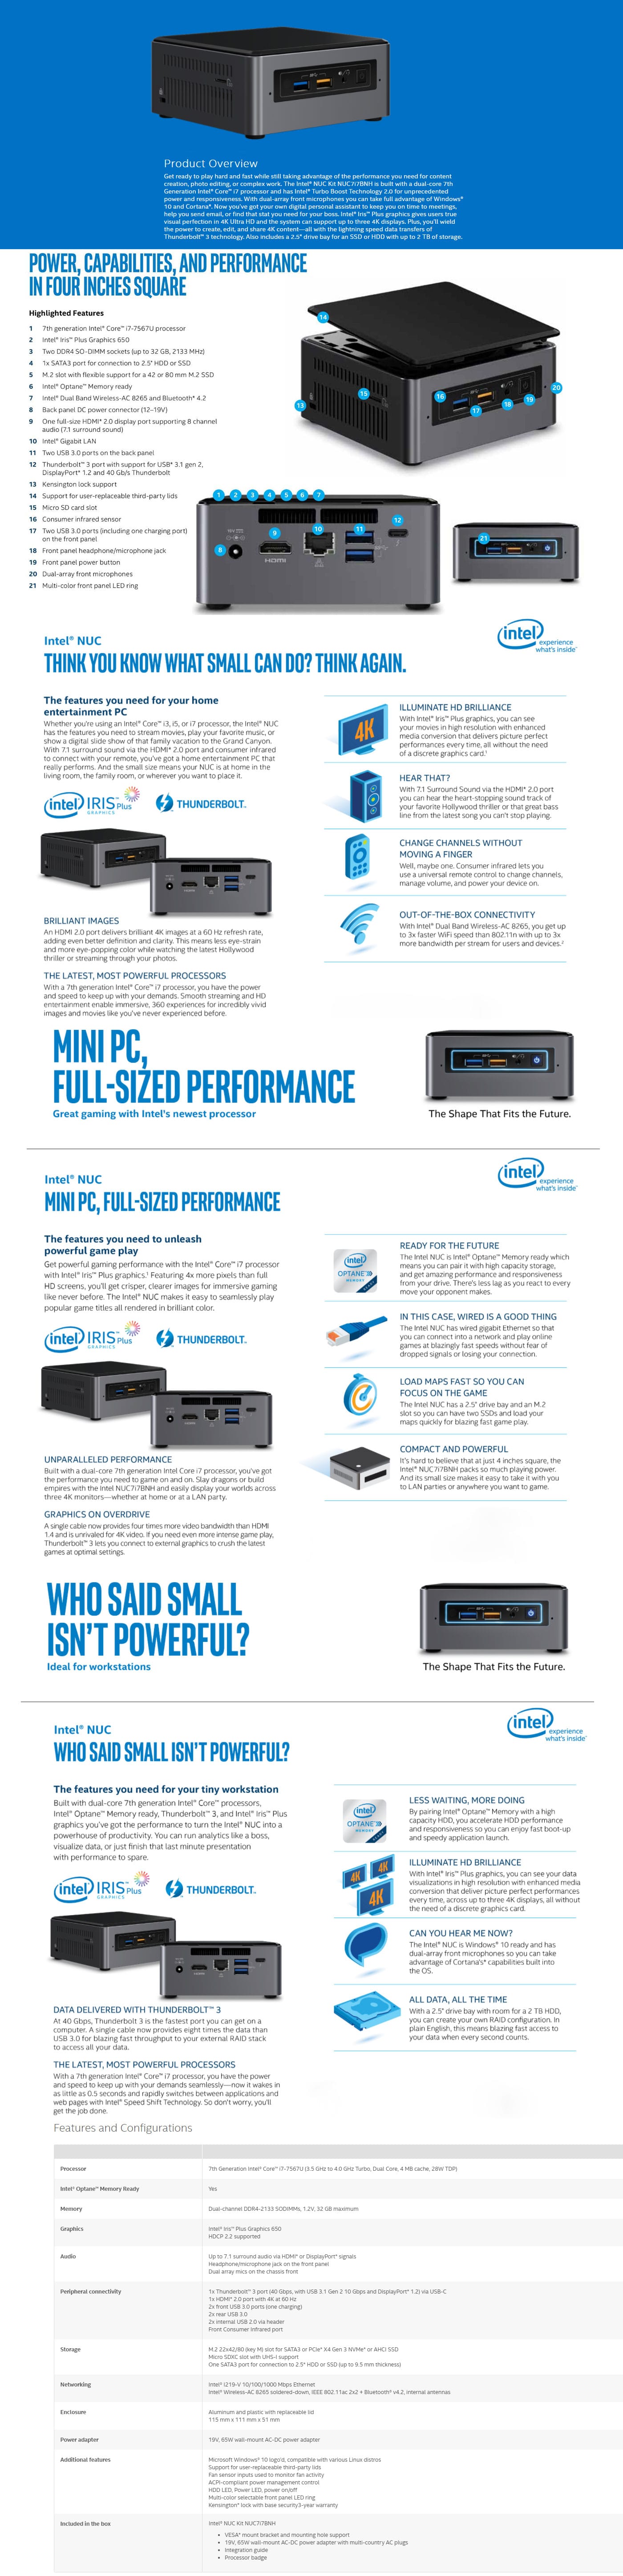 Intel i7 7th Generation NUC Kit